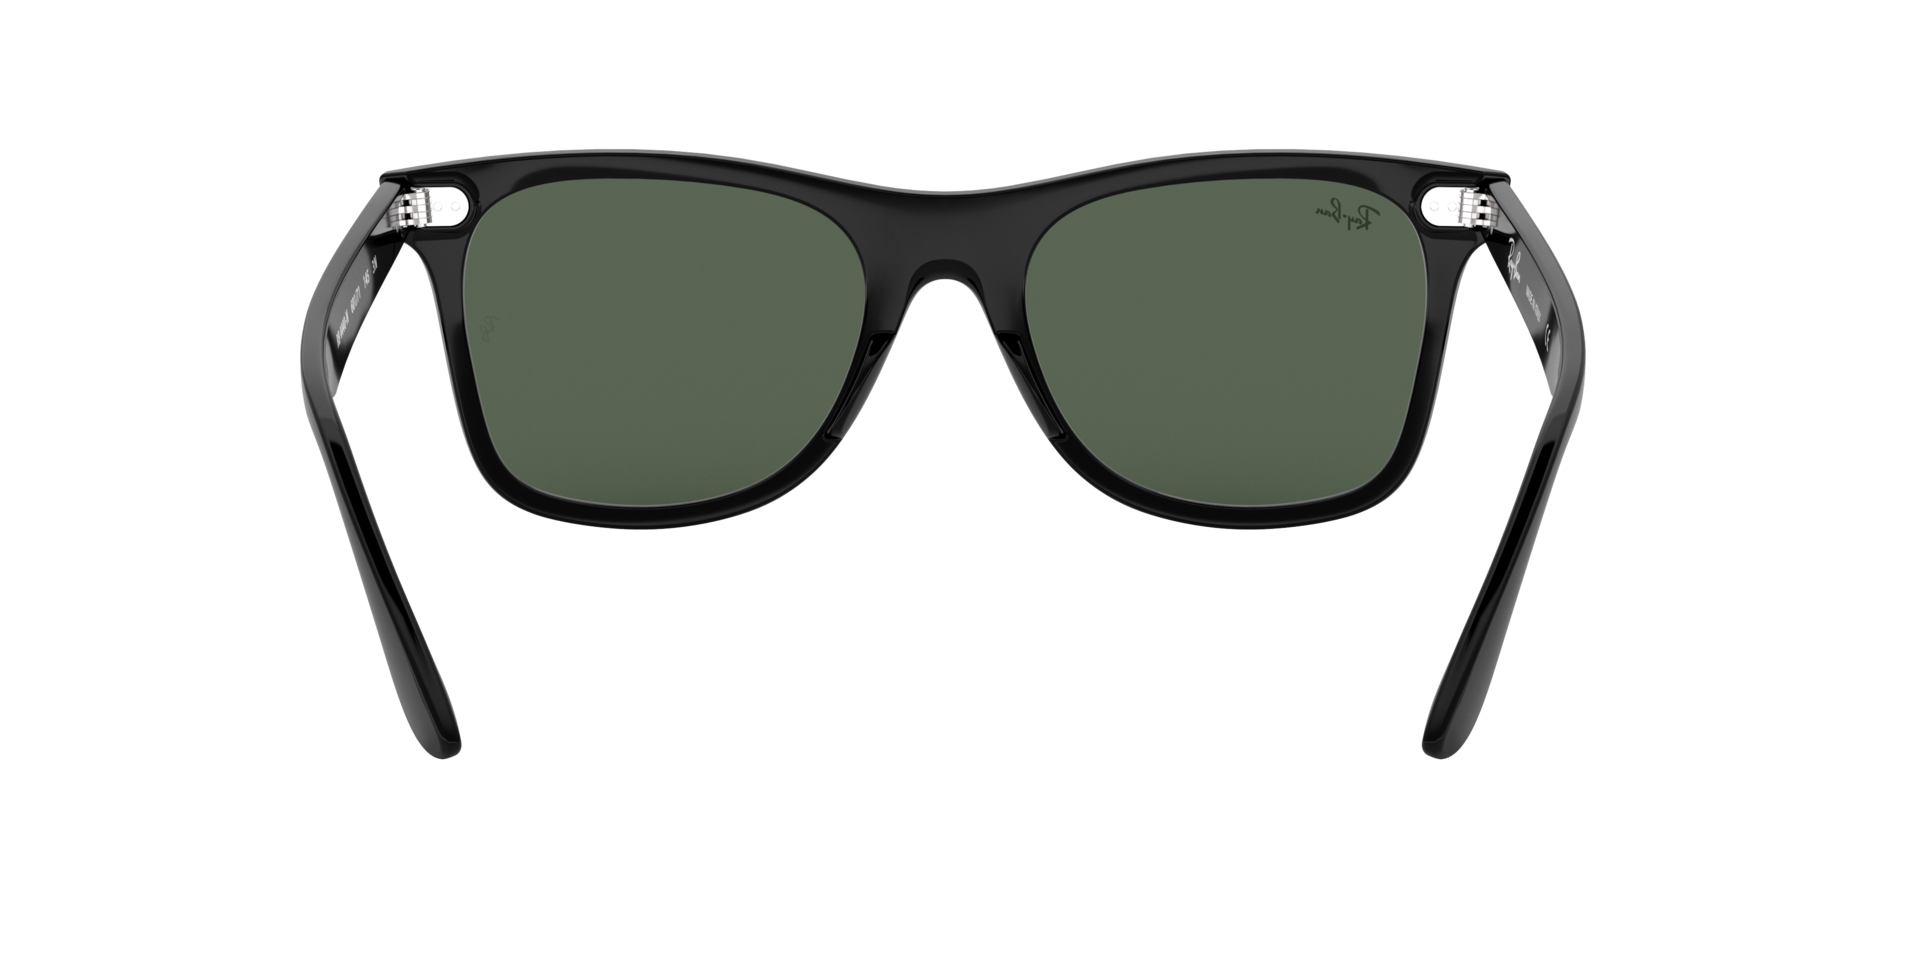 Buy Ray-Ban Blaze Wayfarer Sunglasses Online.